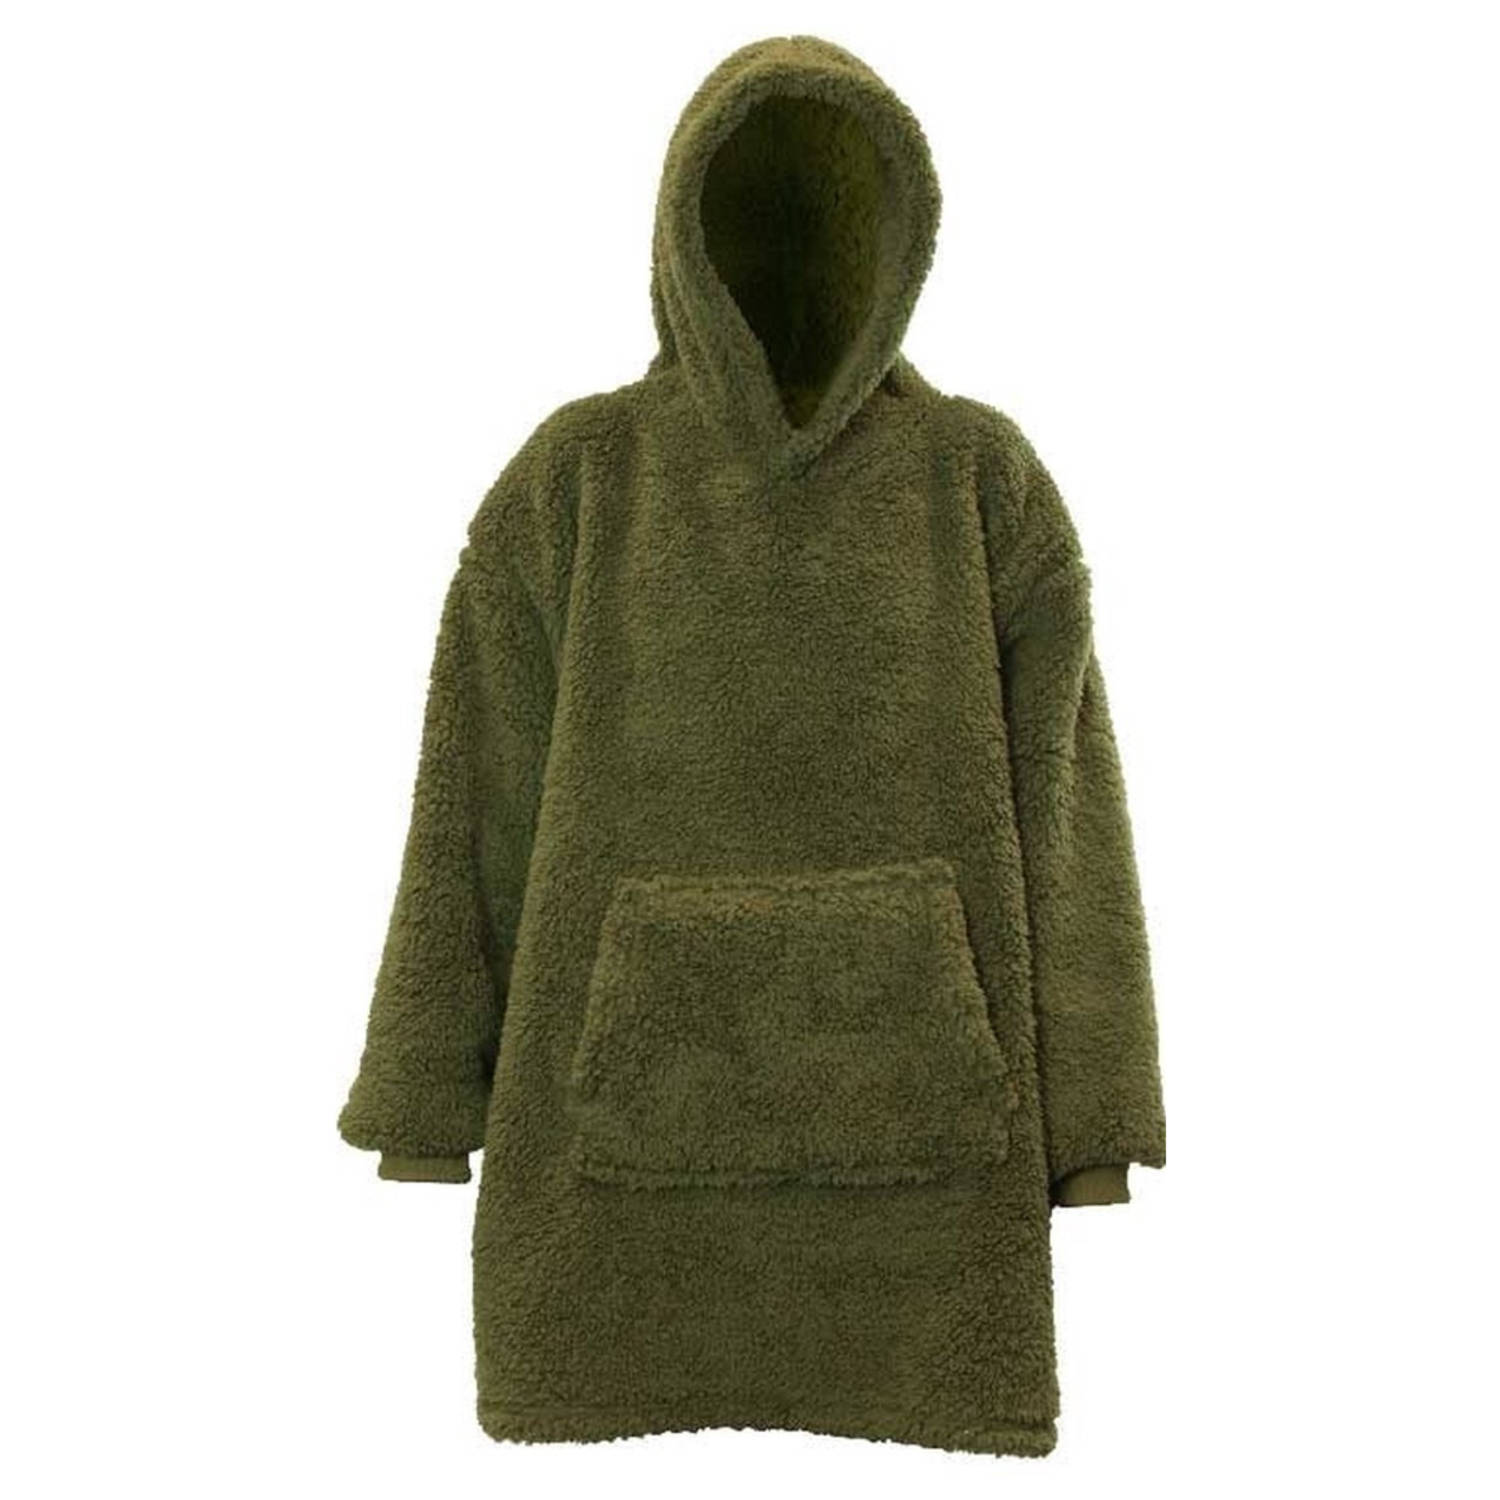 Hoodie - Oversized hoodie - Teddy Stof - Deken met Mouwen - Donker Groen - One Size - Super Zacht